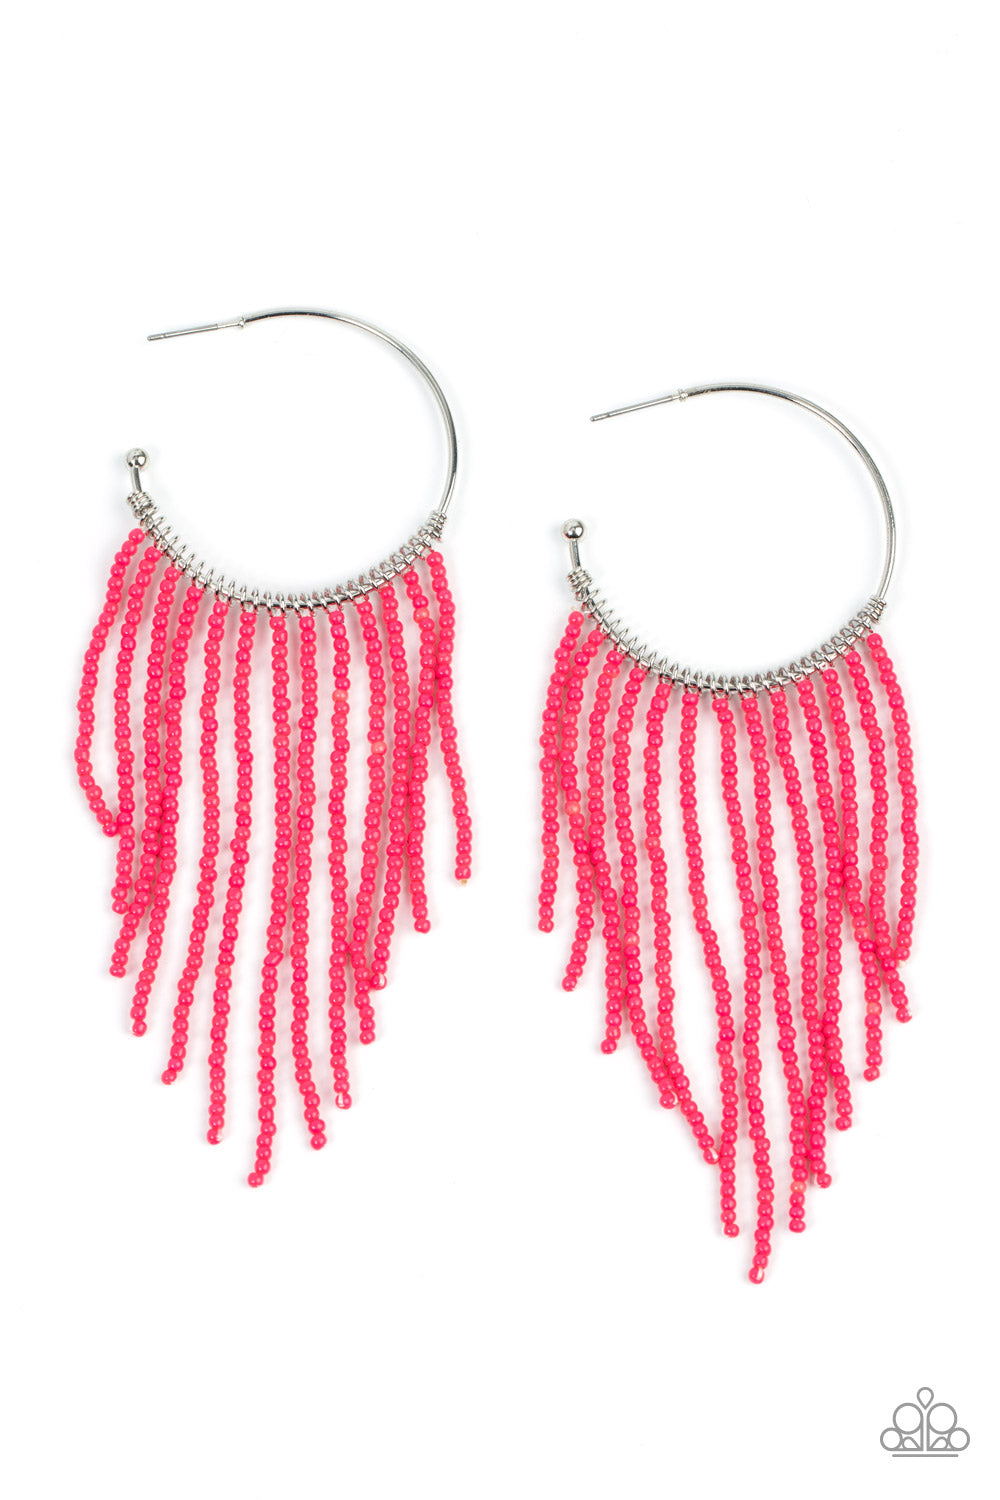 Paparazzi Accessories - Saguaro Breeze #E291 Peg - Pink Earrings